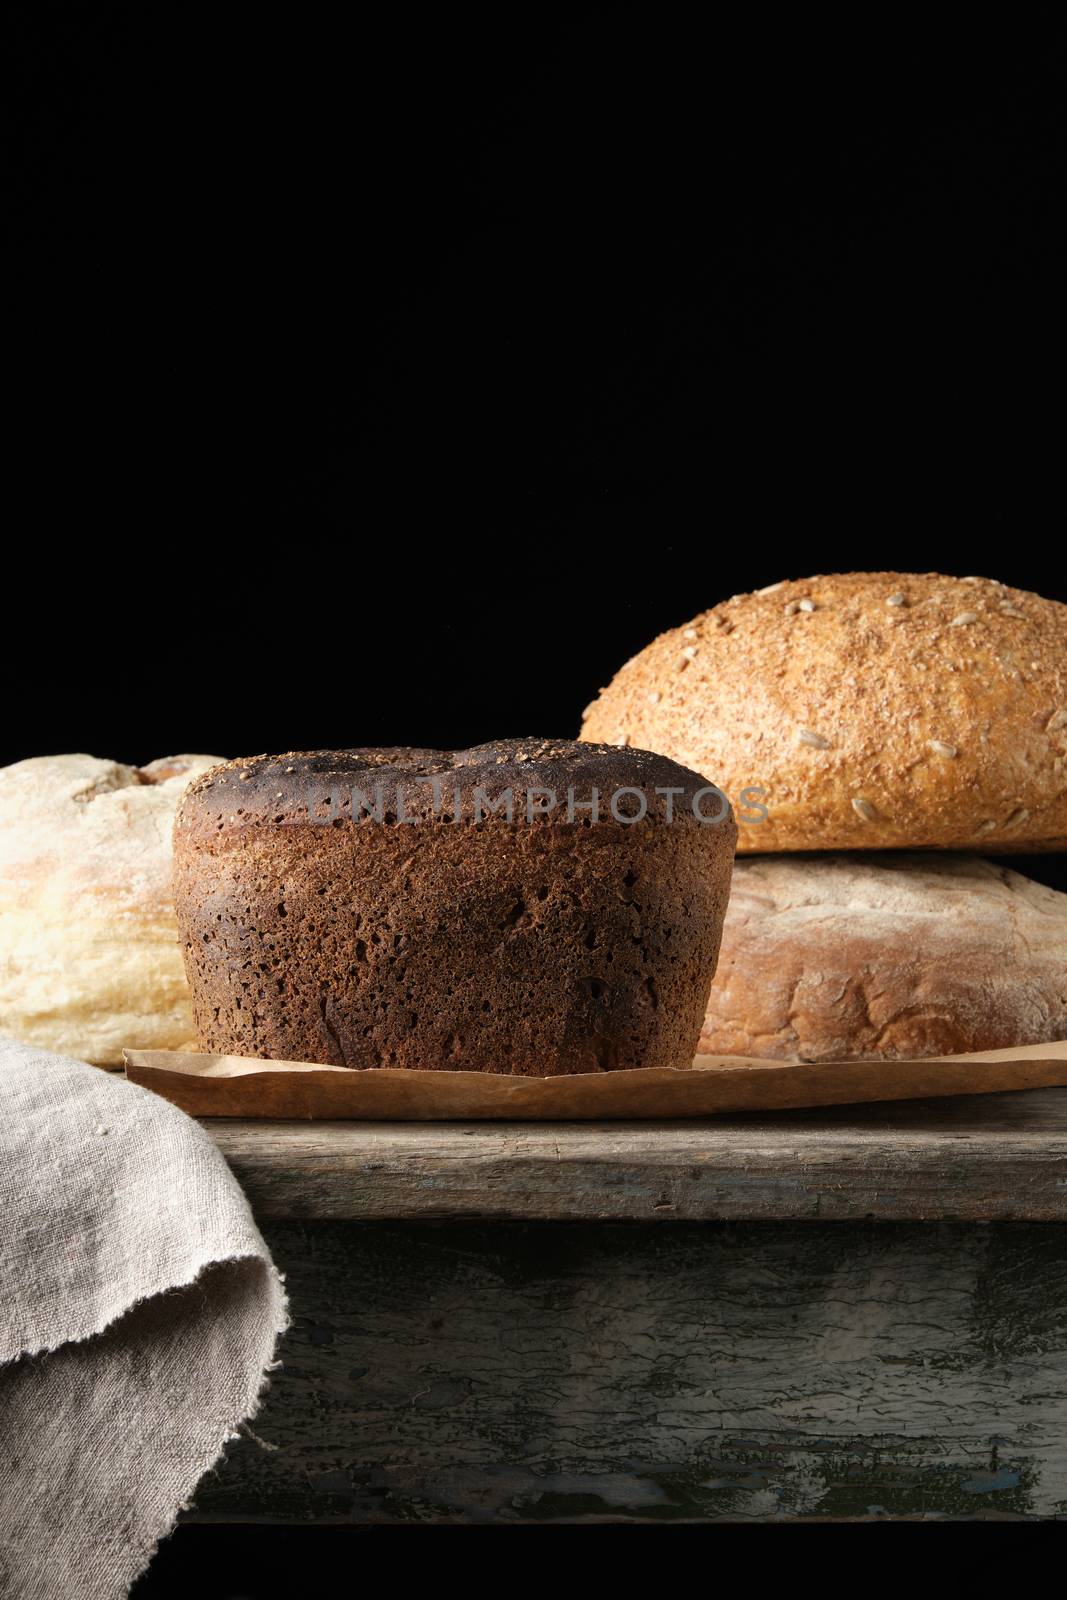 baked rye flour bread on a wooden table by ndanko